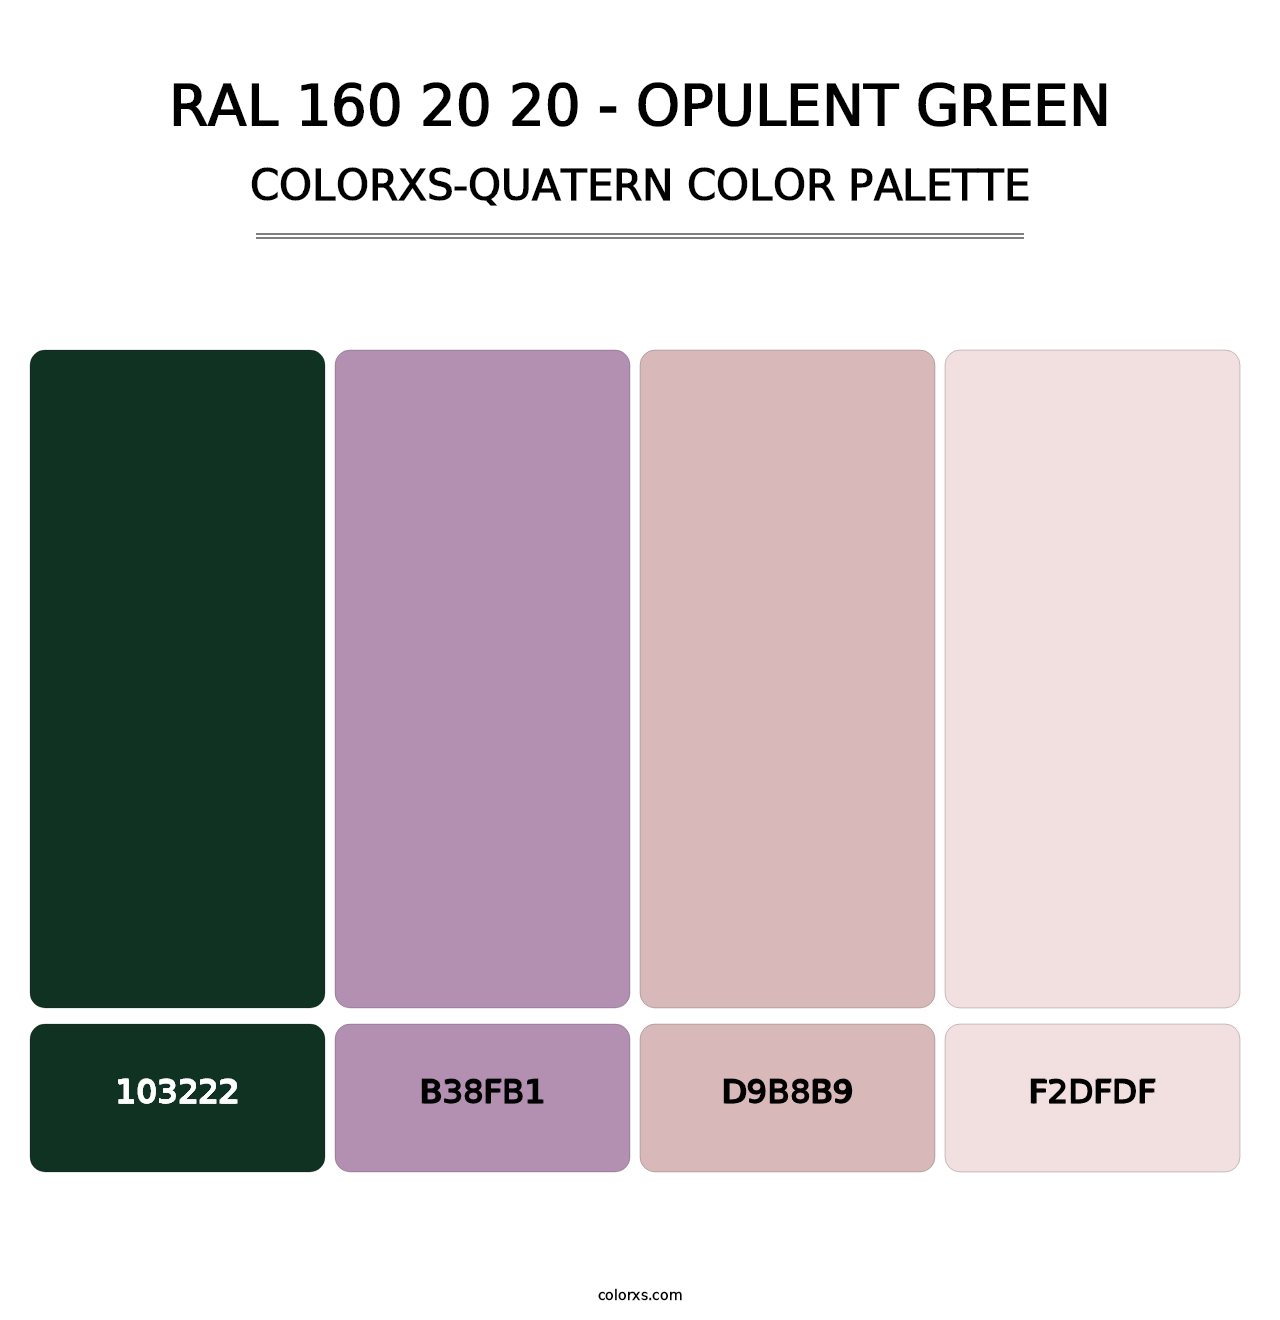 RAL 160 20 20 - Opulent Green - Colorxs Quatern Palette